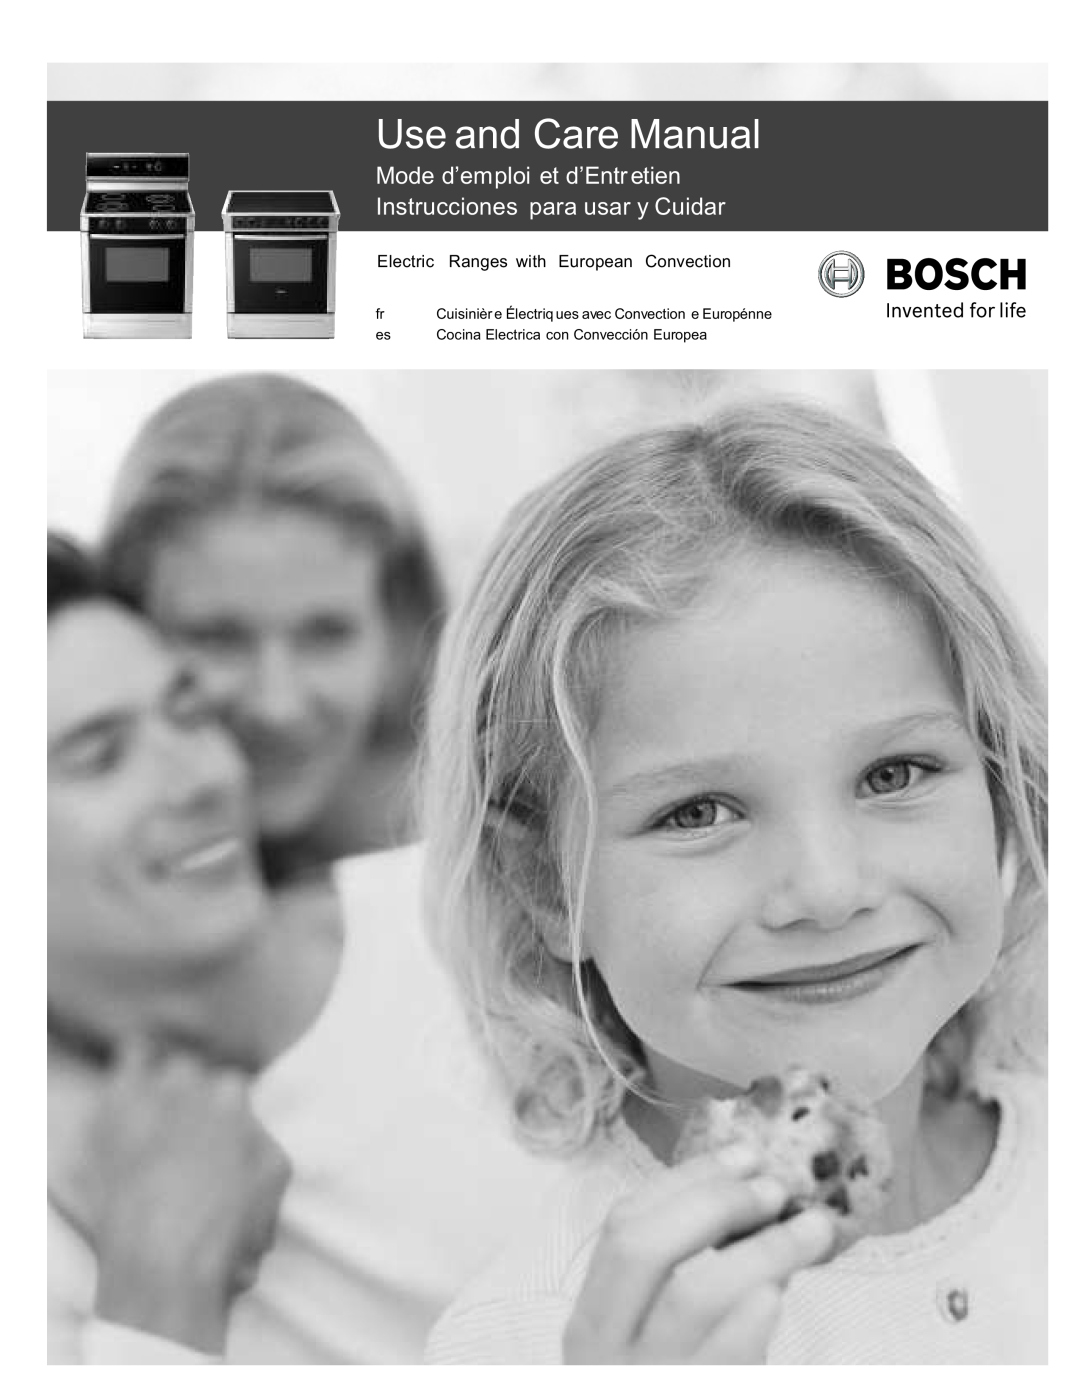 Bosch Appliances HES7052U manual Use and Care Manual, Mode d’emploi et d’Entretien Instrucciones para usar y Cuidar 